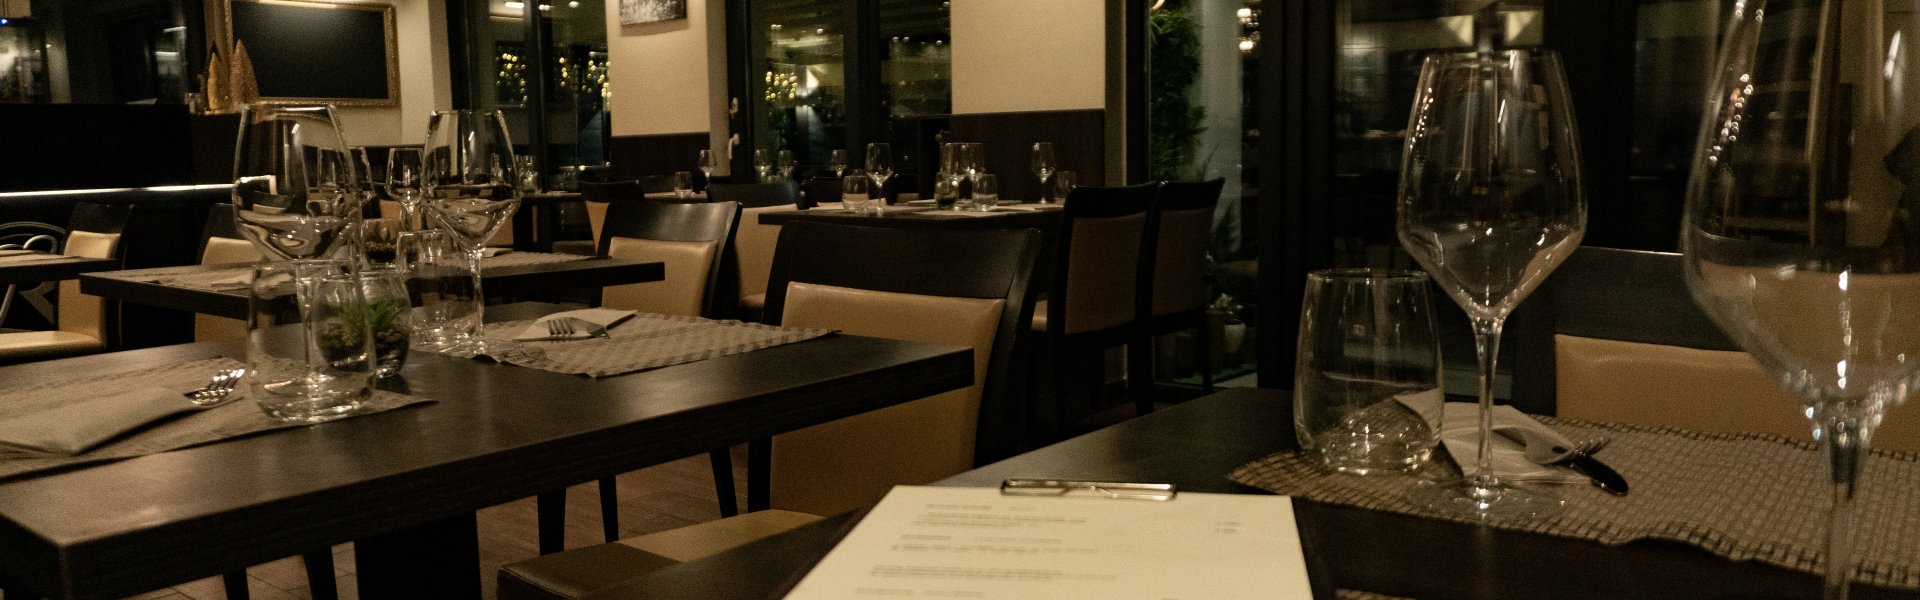 Event request for proposals at the Liget Royal Restaurant Hévíz